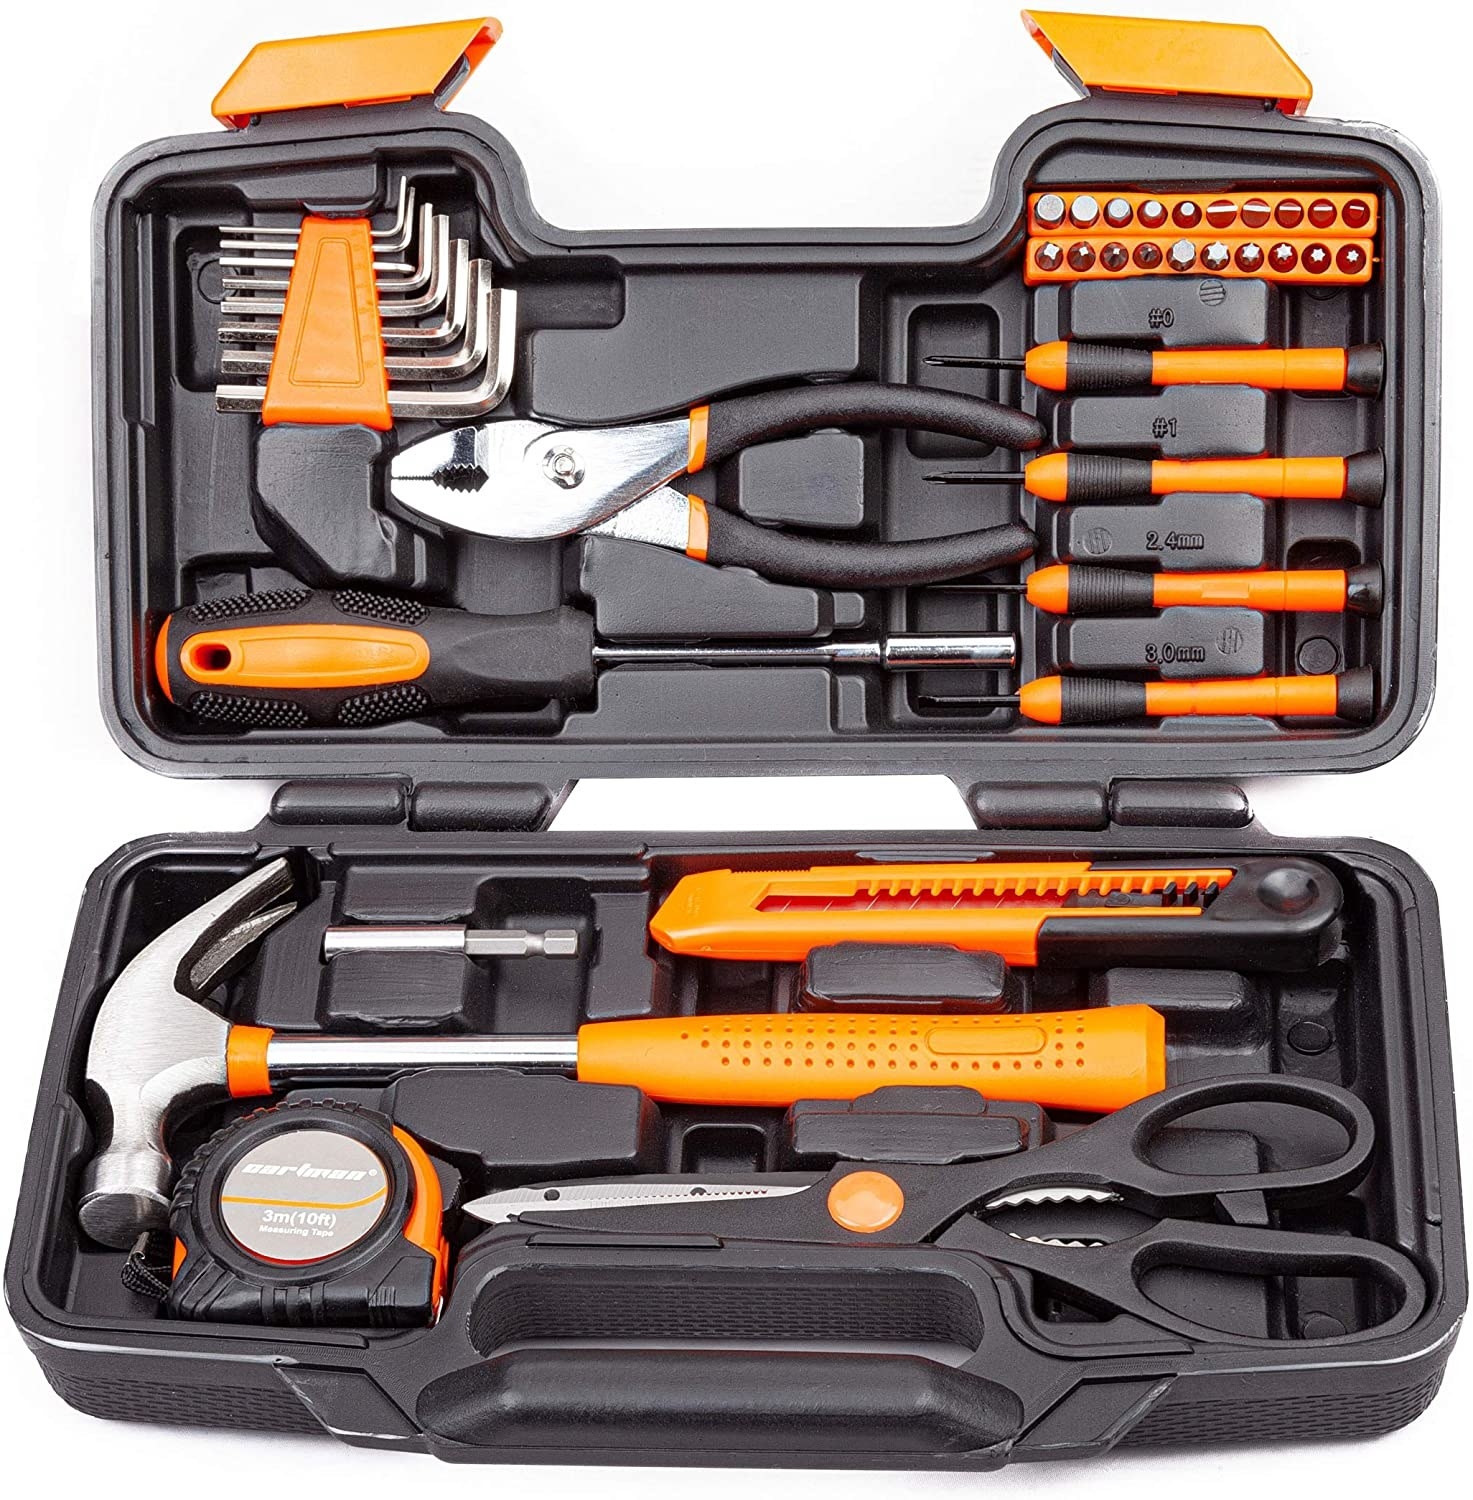 The tool kit